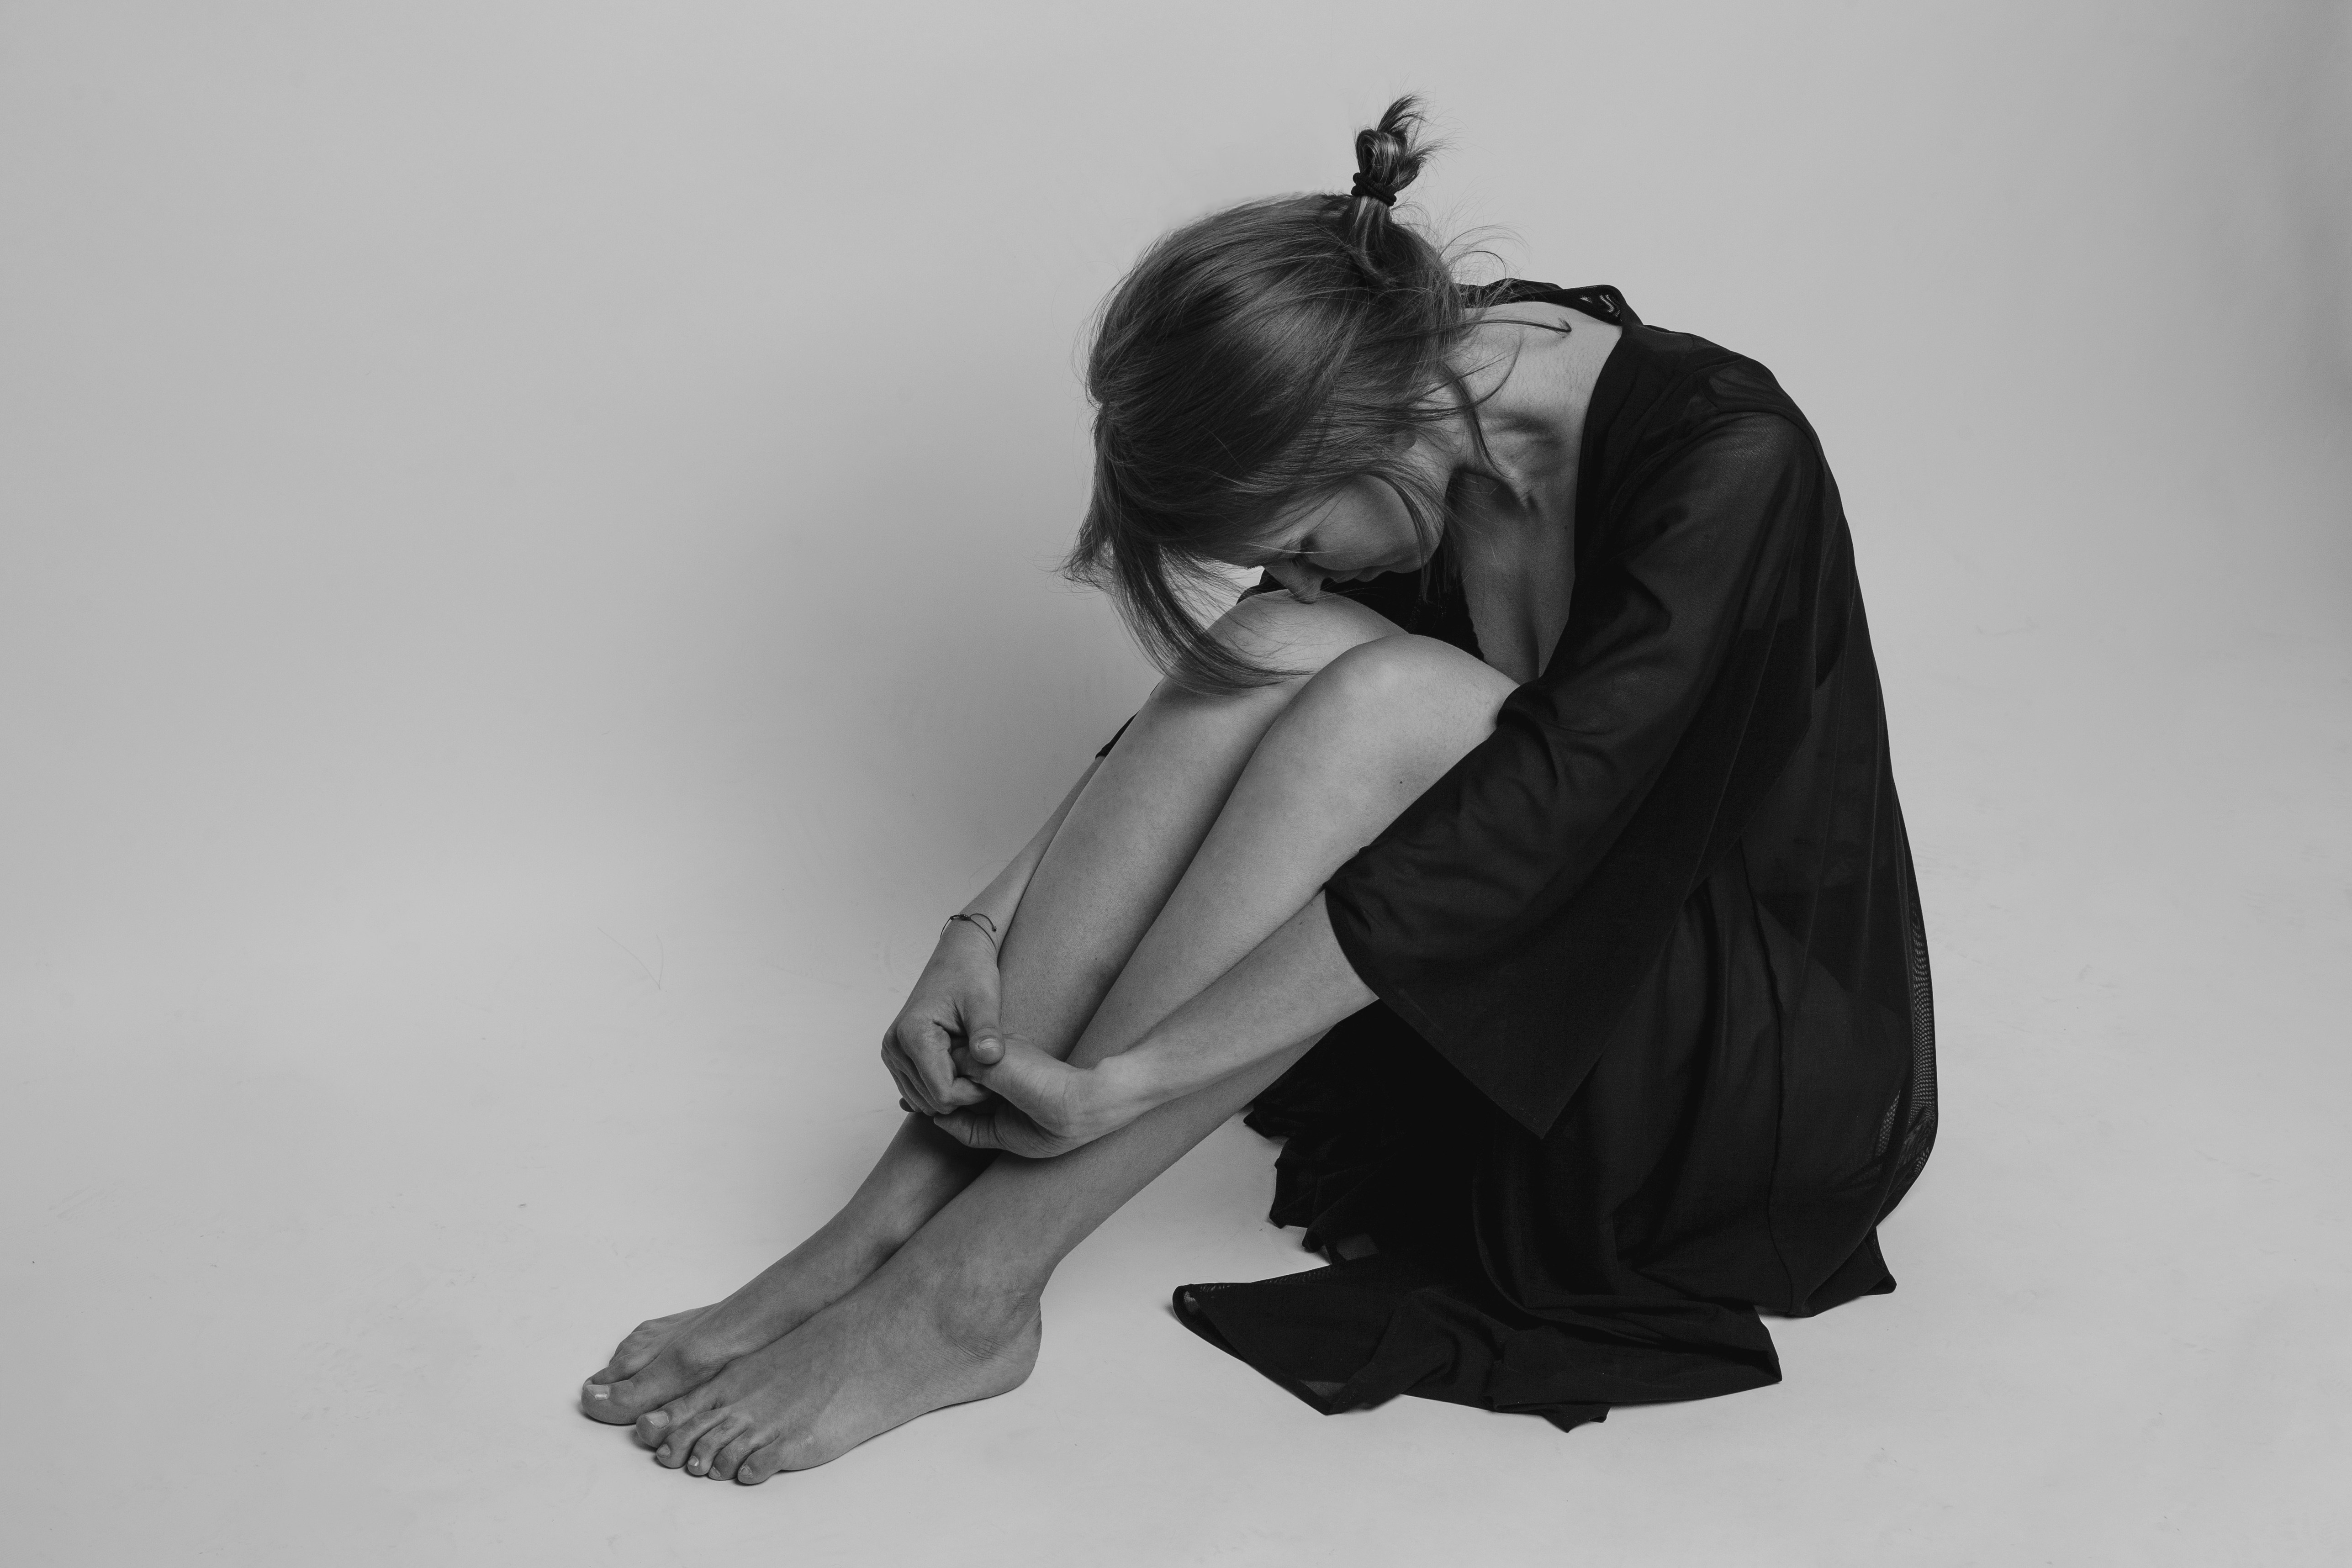 A depressed woman | Source: Unsplash